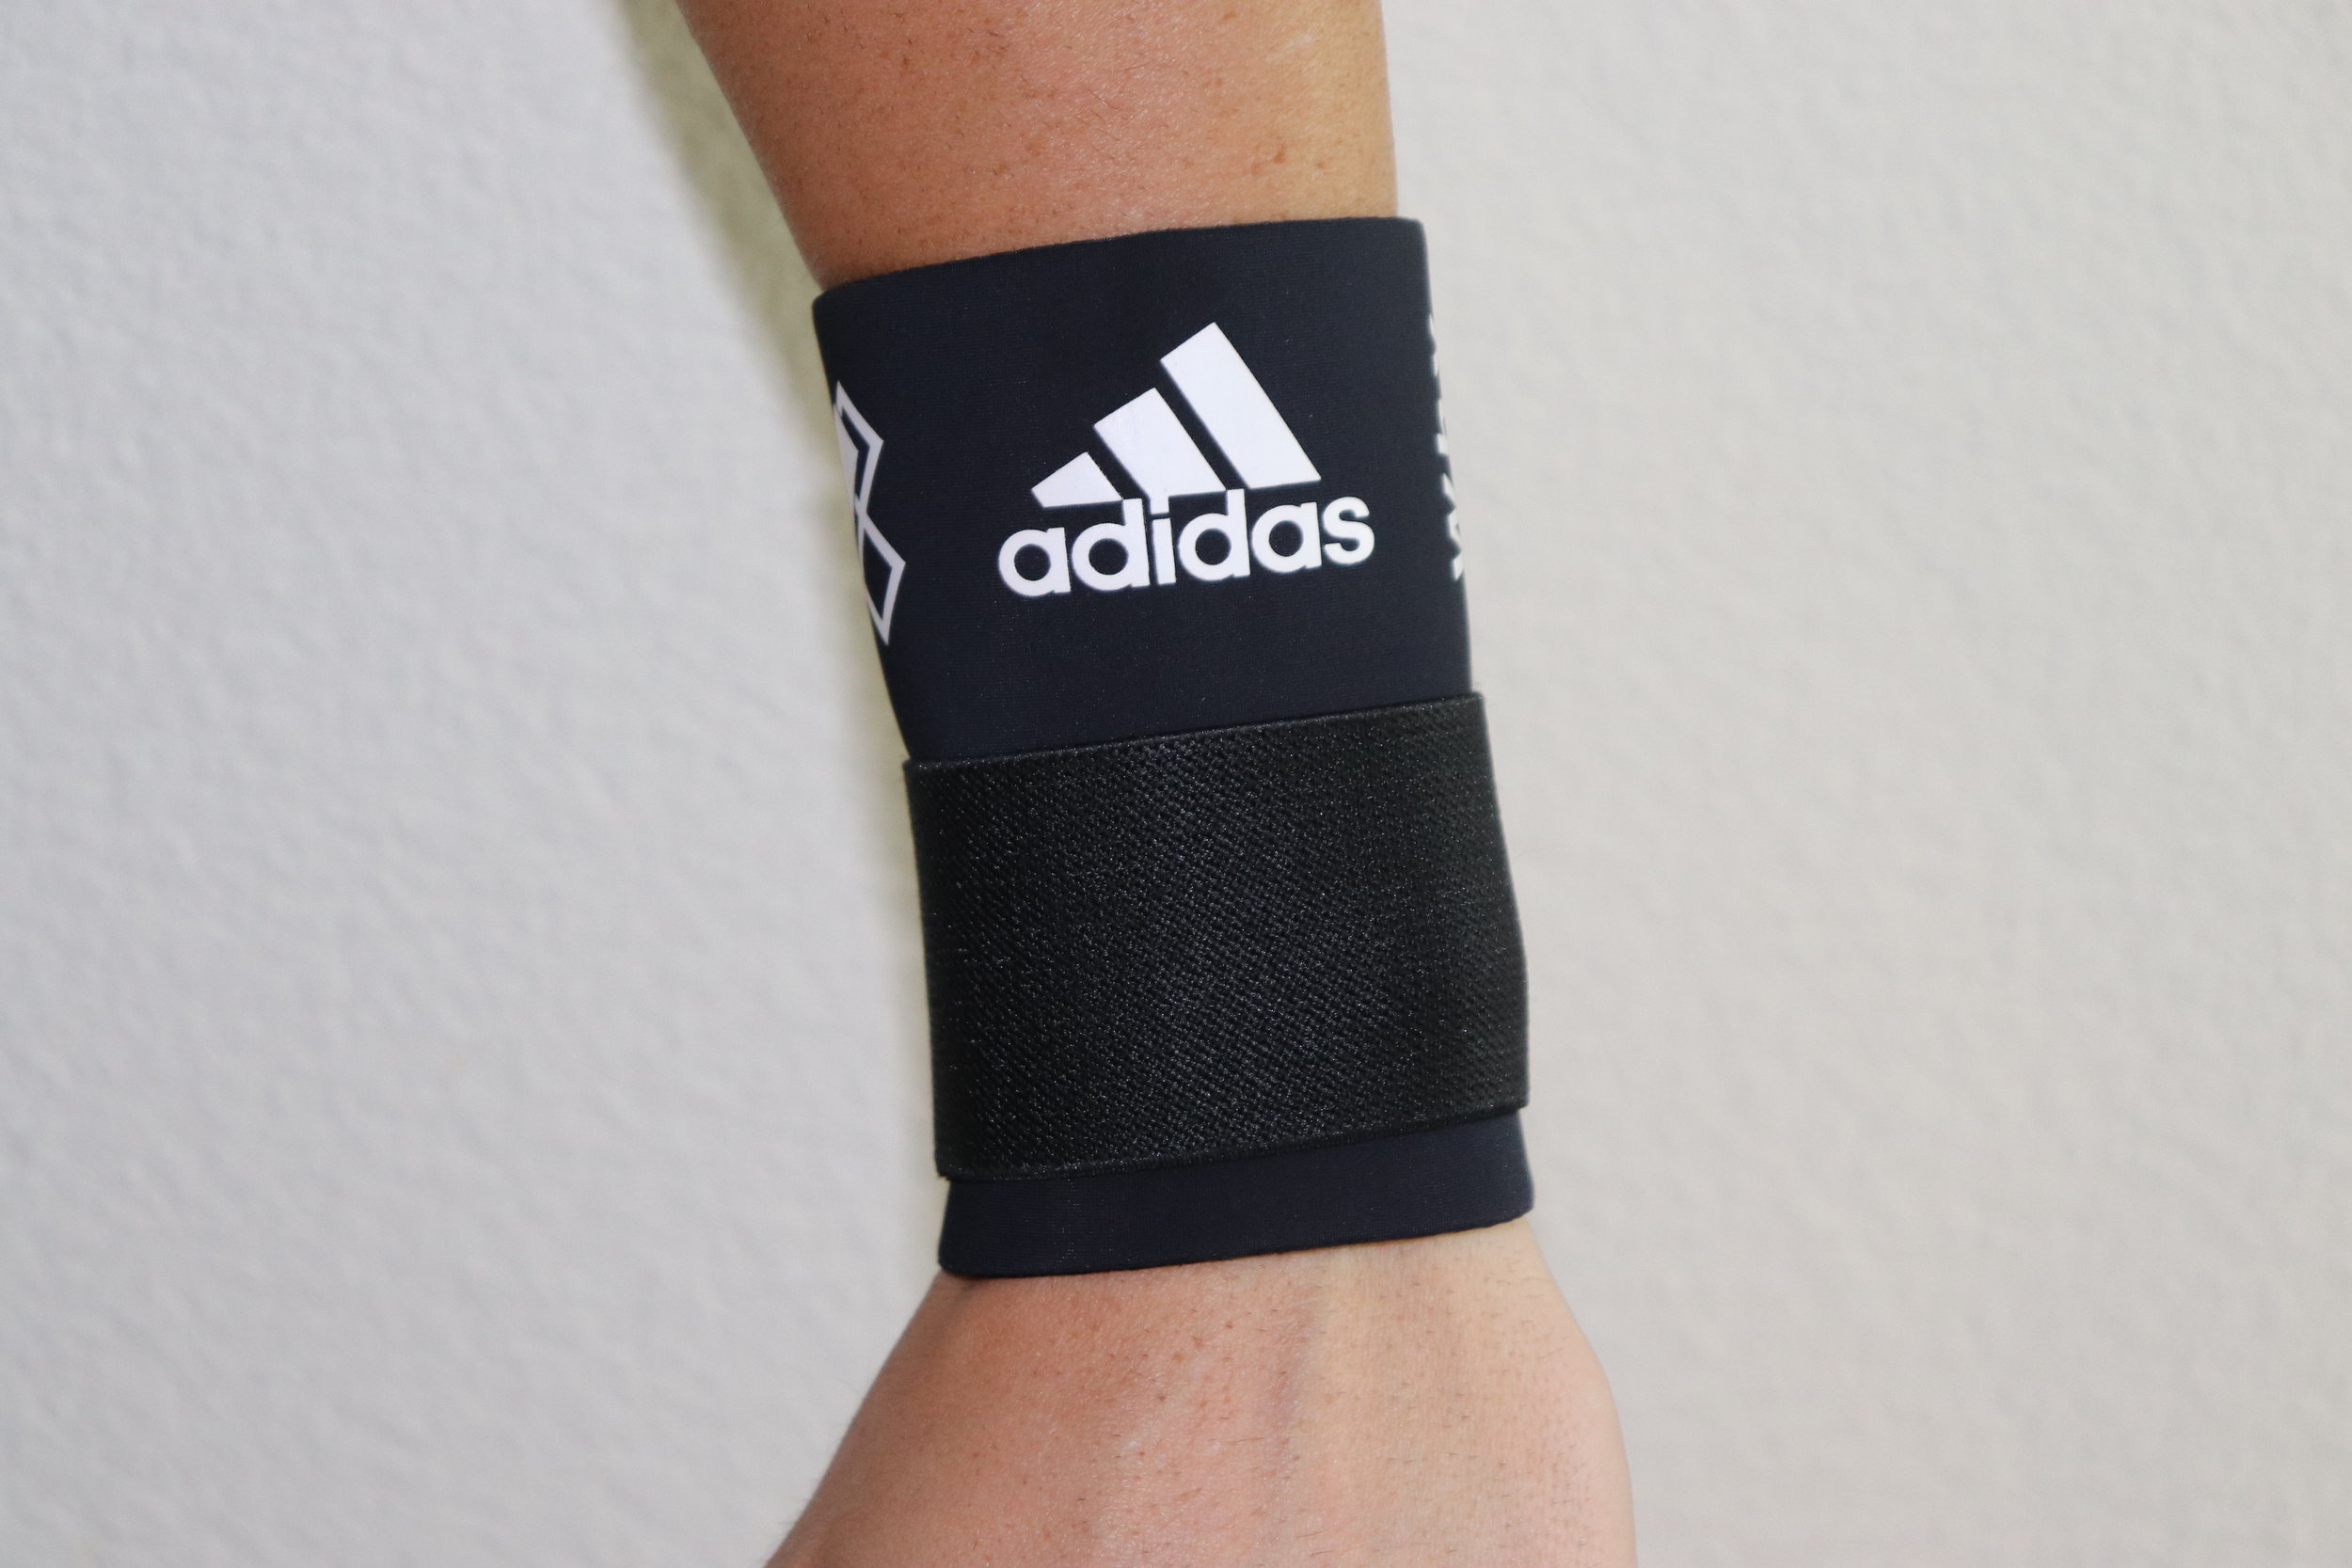 adidas - Pro Series Wrist - White Writing on Black Band — Heart Has No Limit